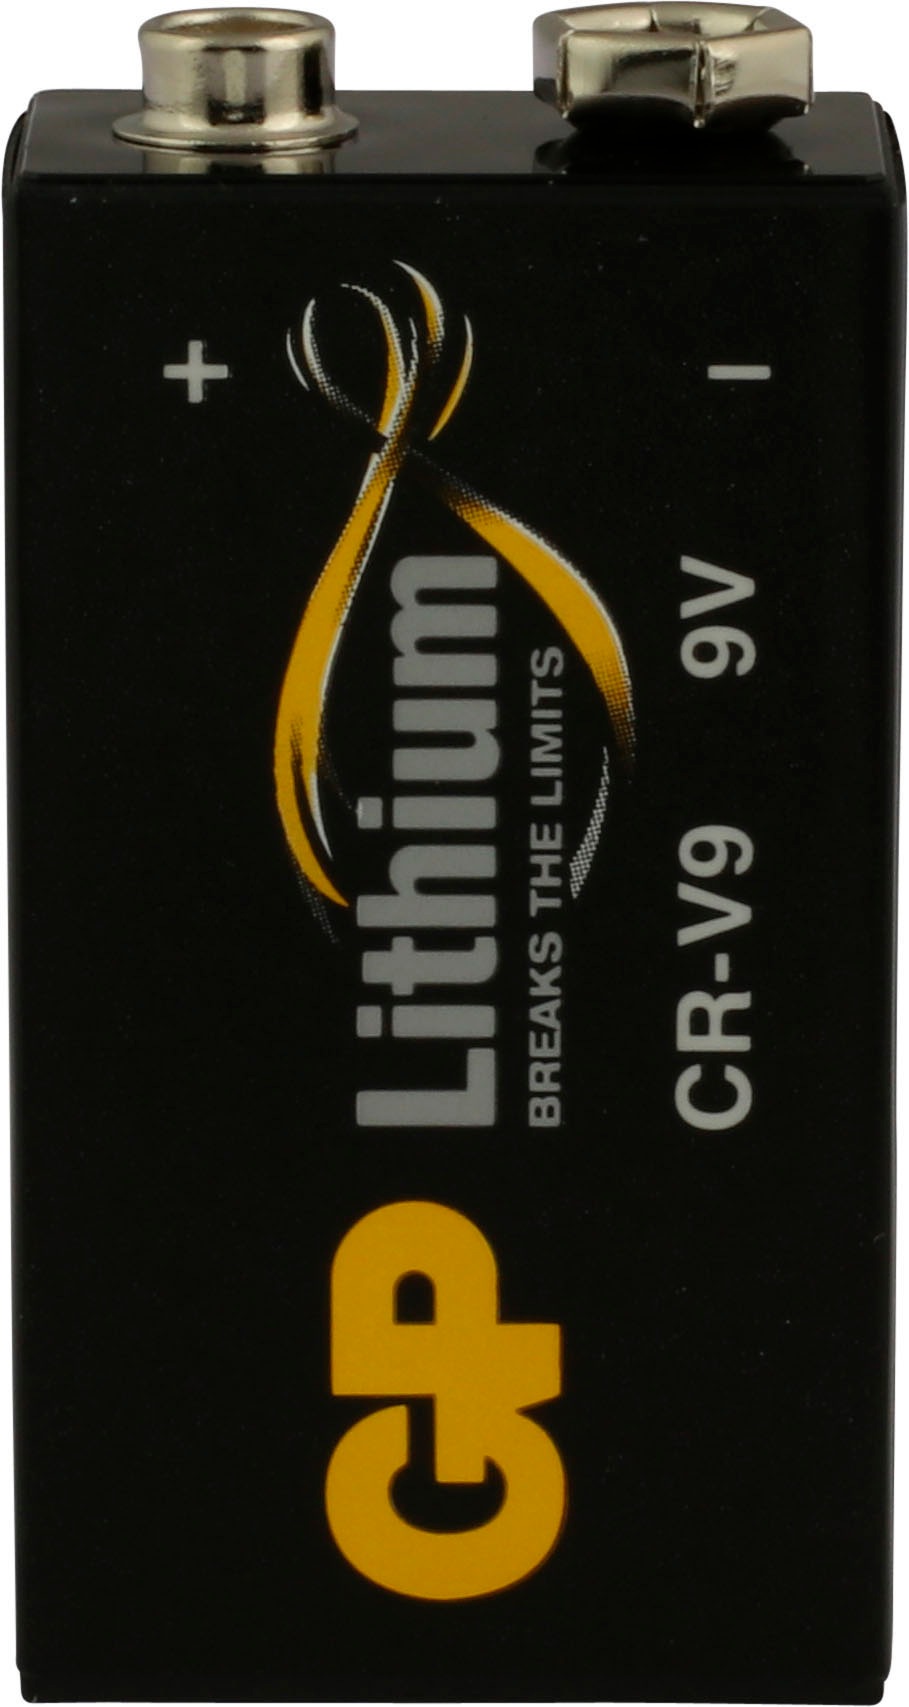 GP Batteries Batterie »CR-V9«, U9VL, 9 V, (1 St.), ideal für Rauchmelder